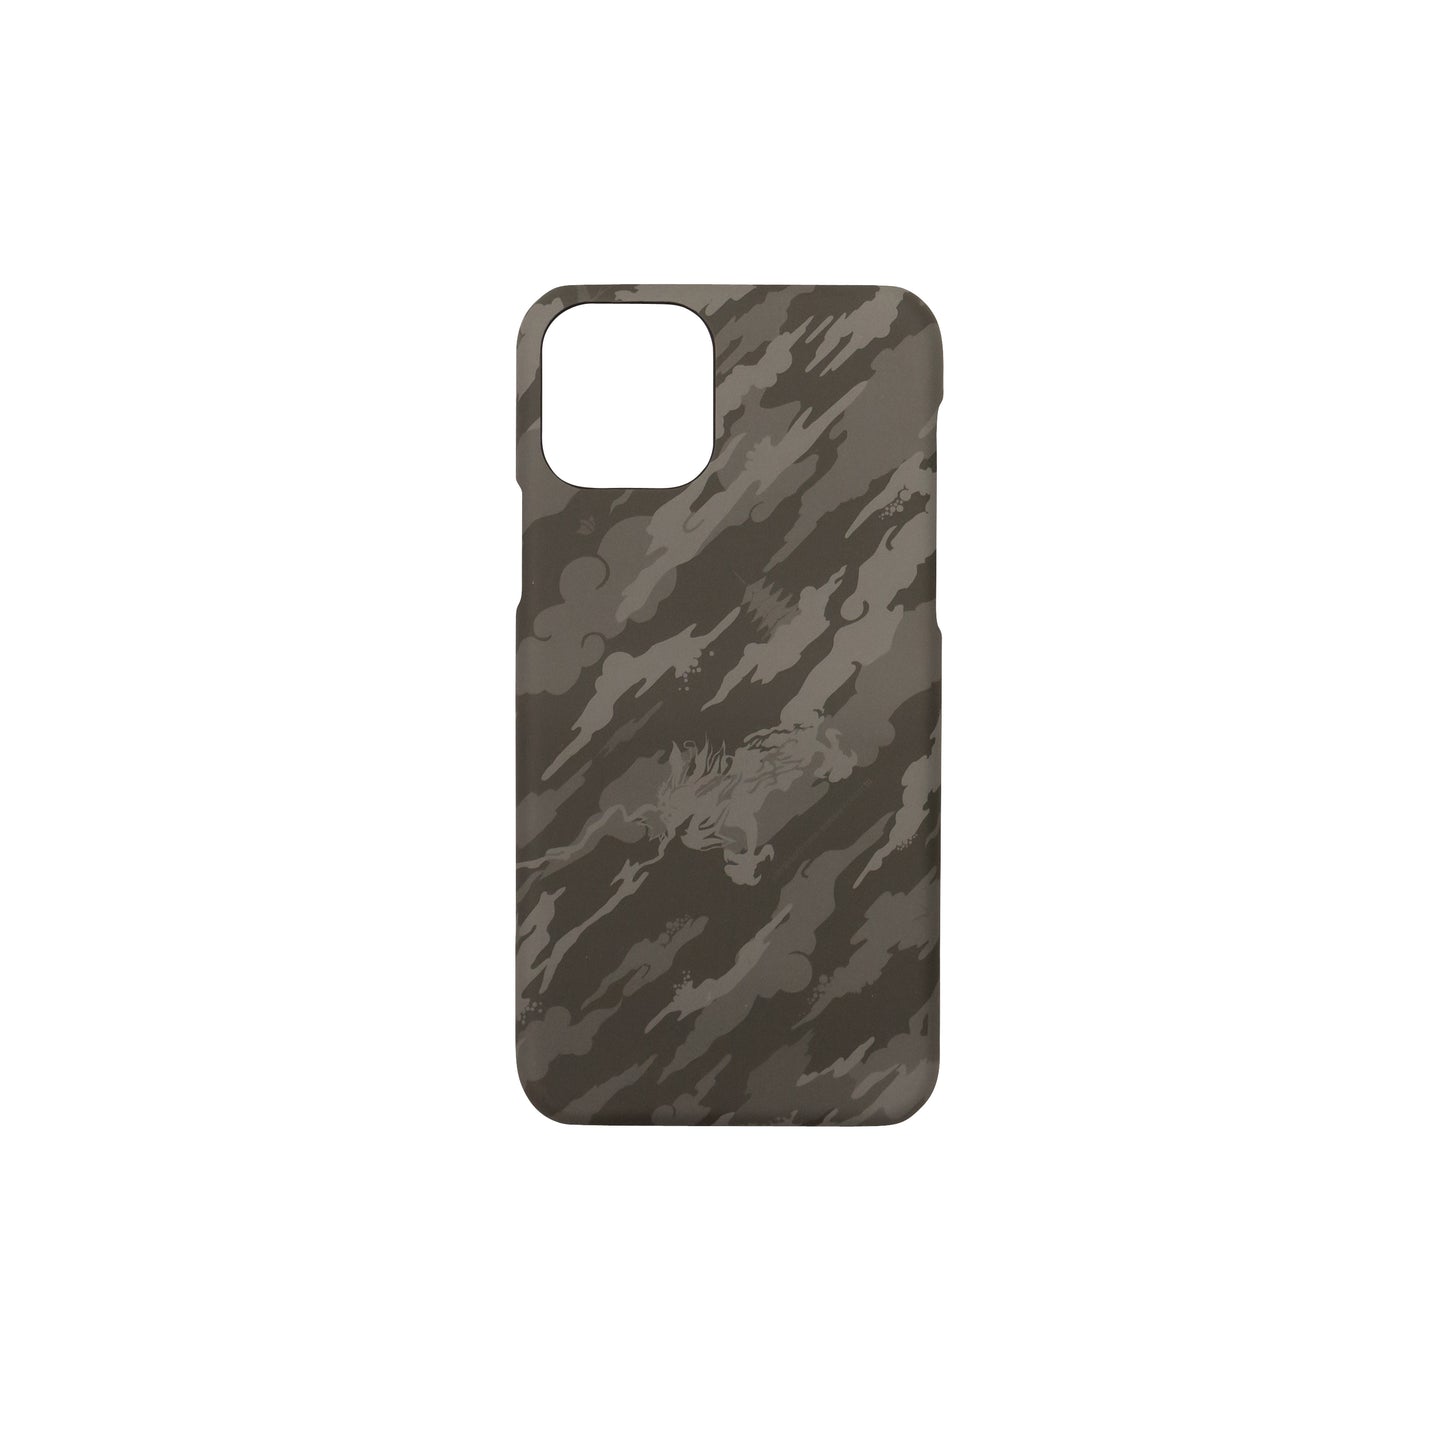 Maharishi Iphone 11 Pro Case - Gray